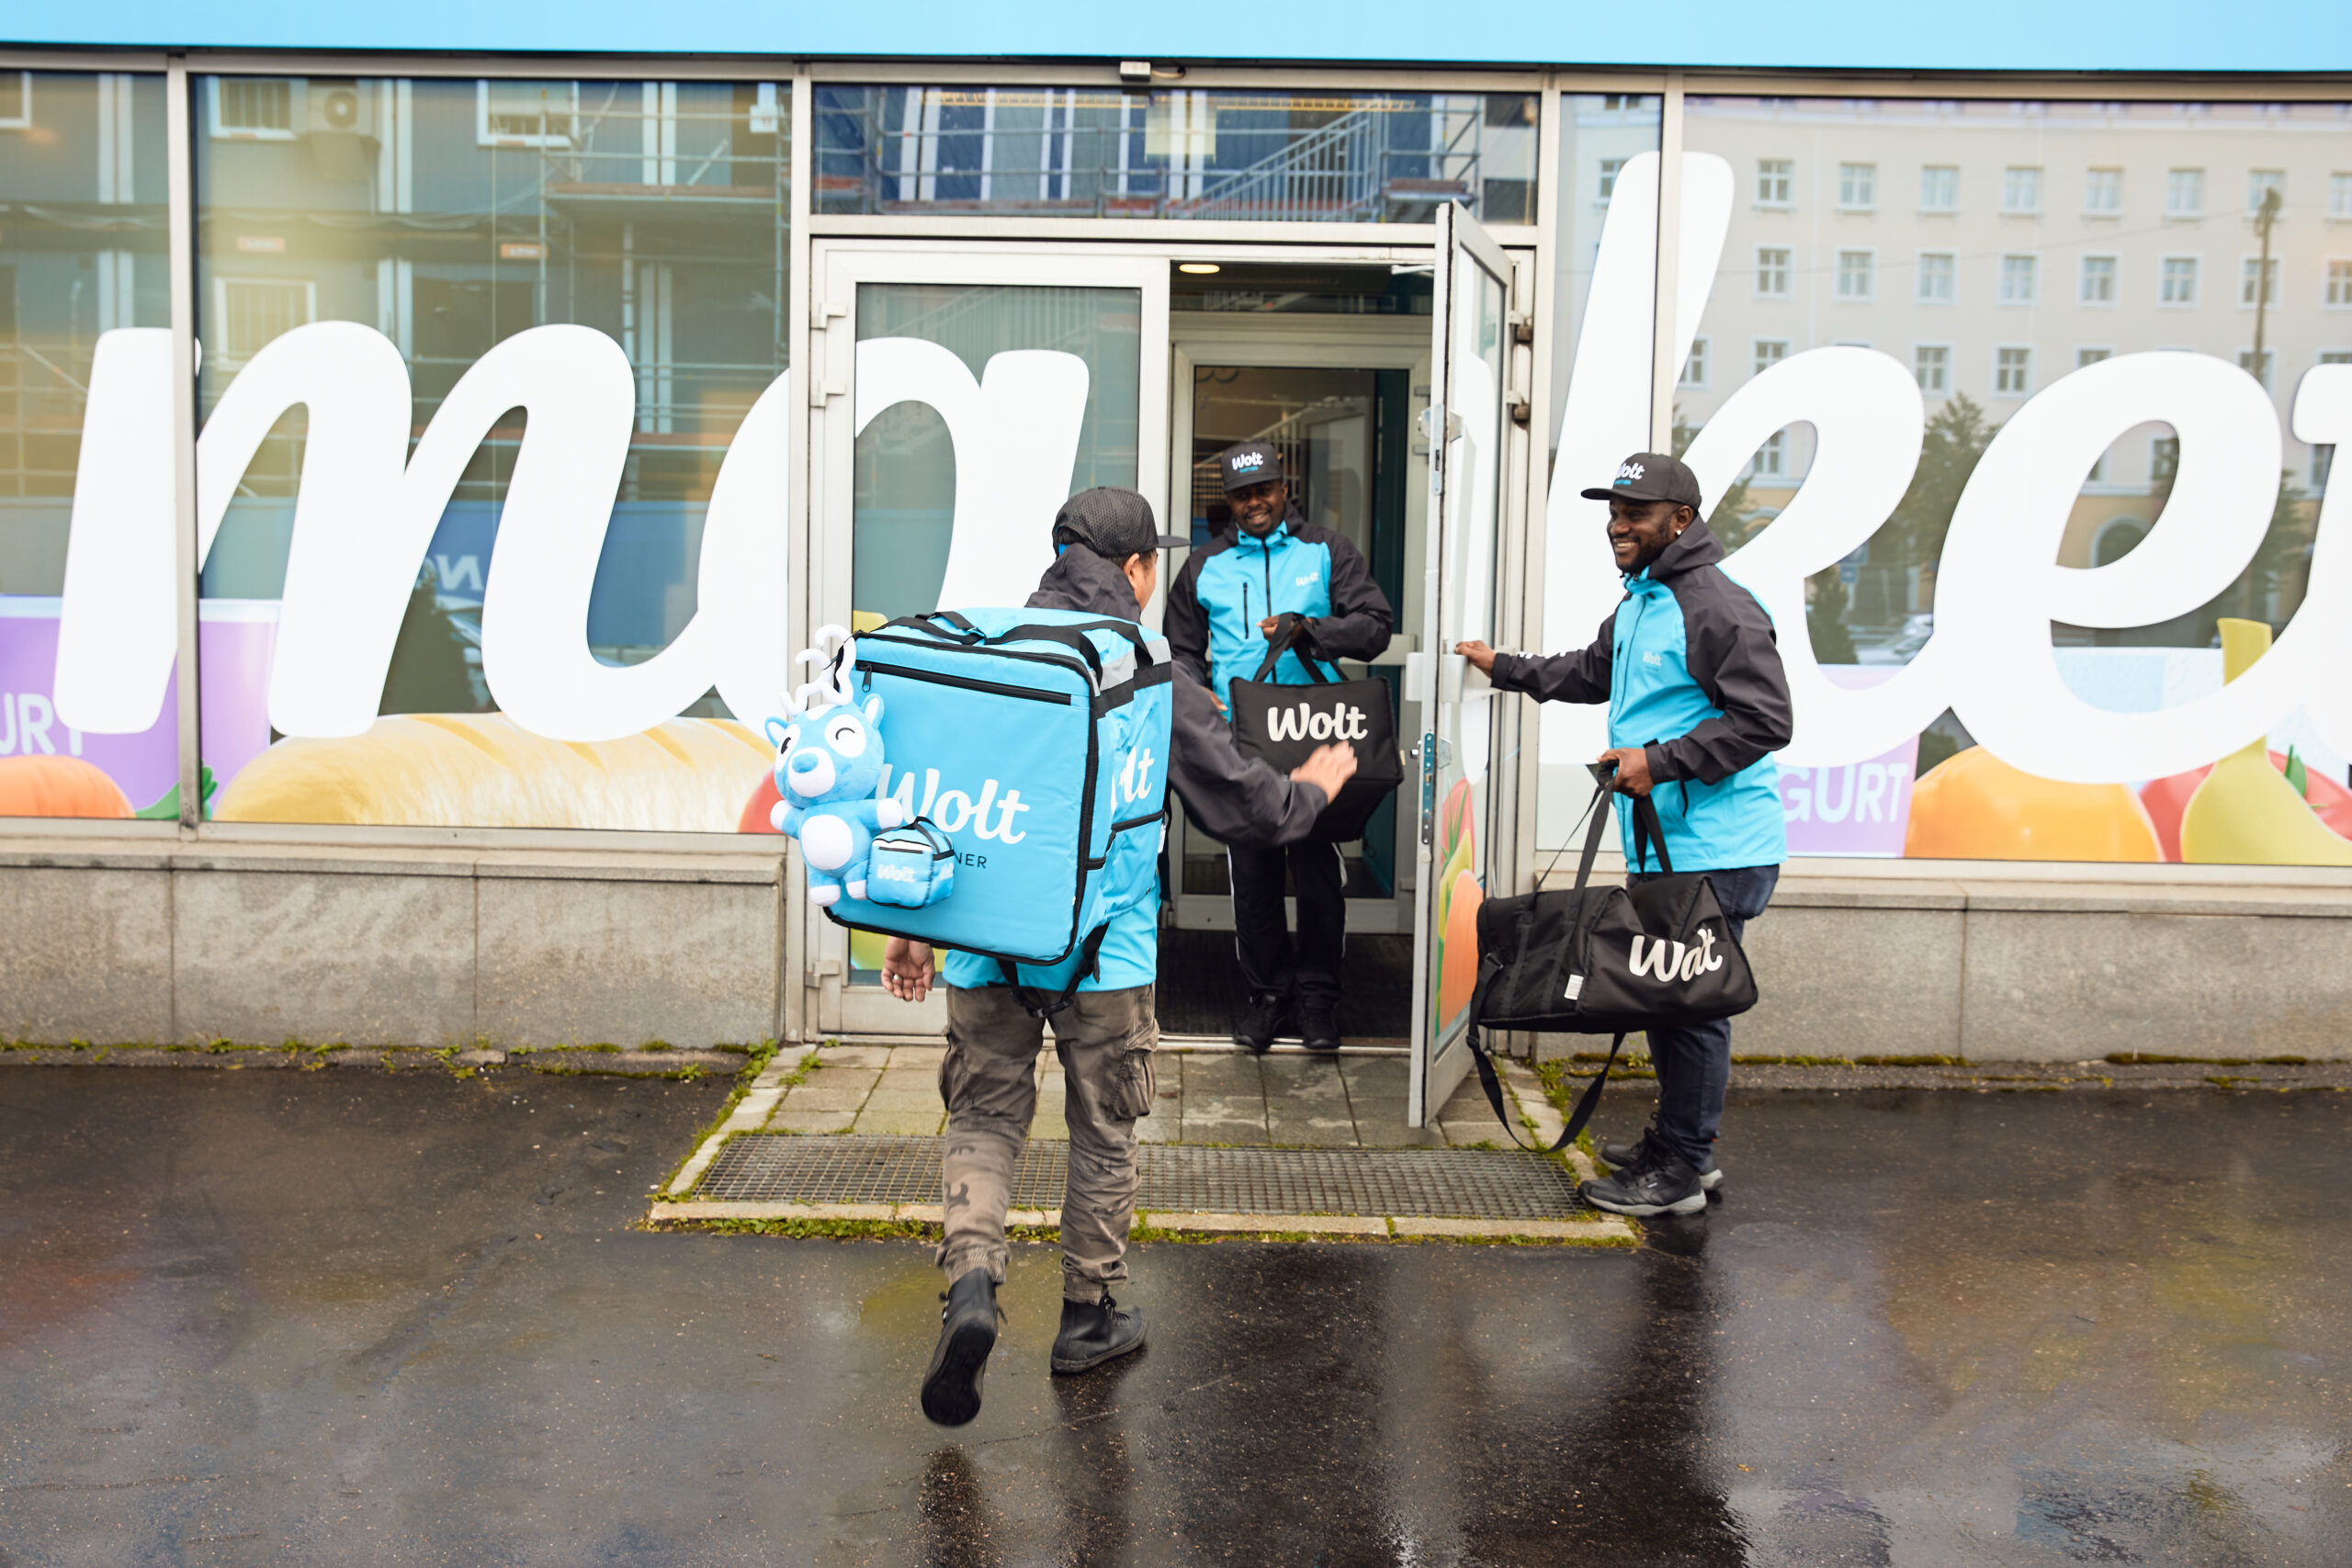 Wolt lanserar dark stores i Sverige